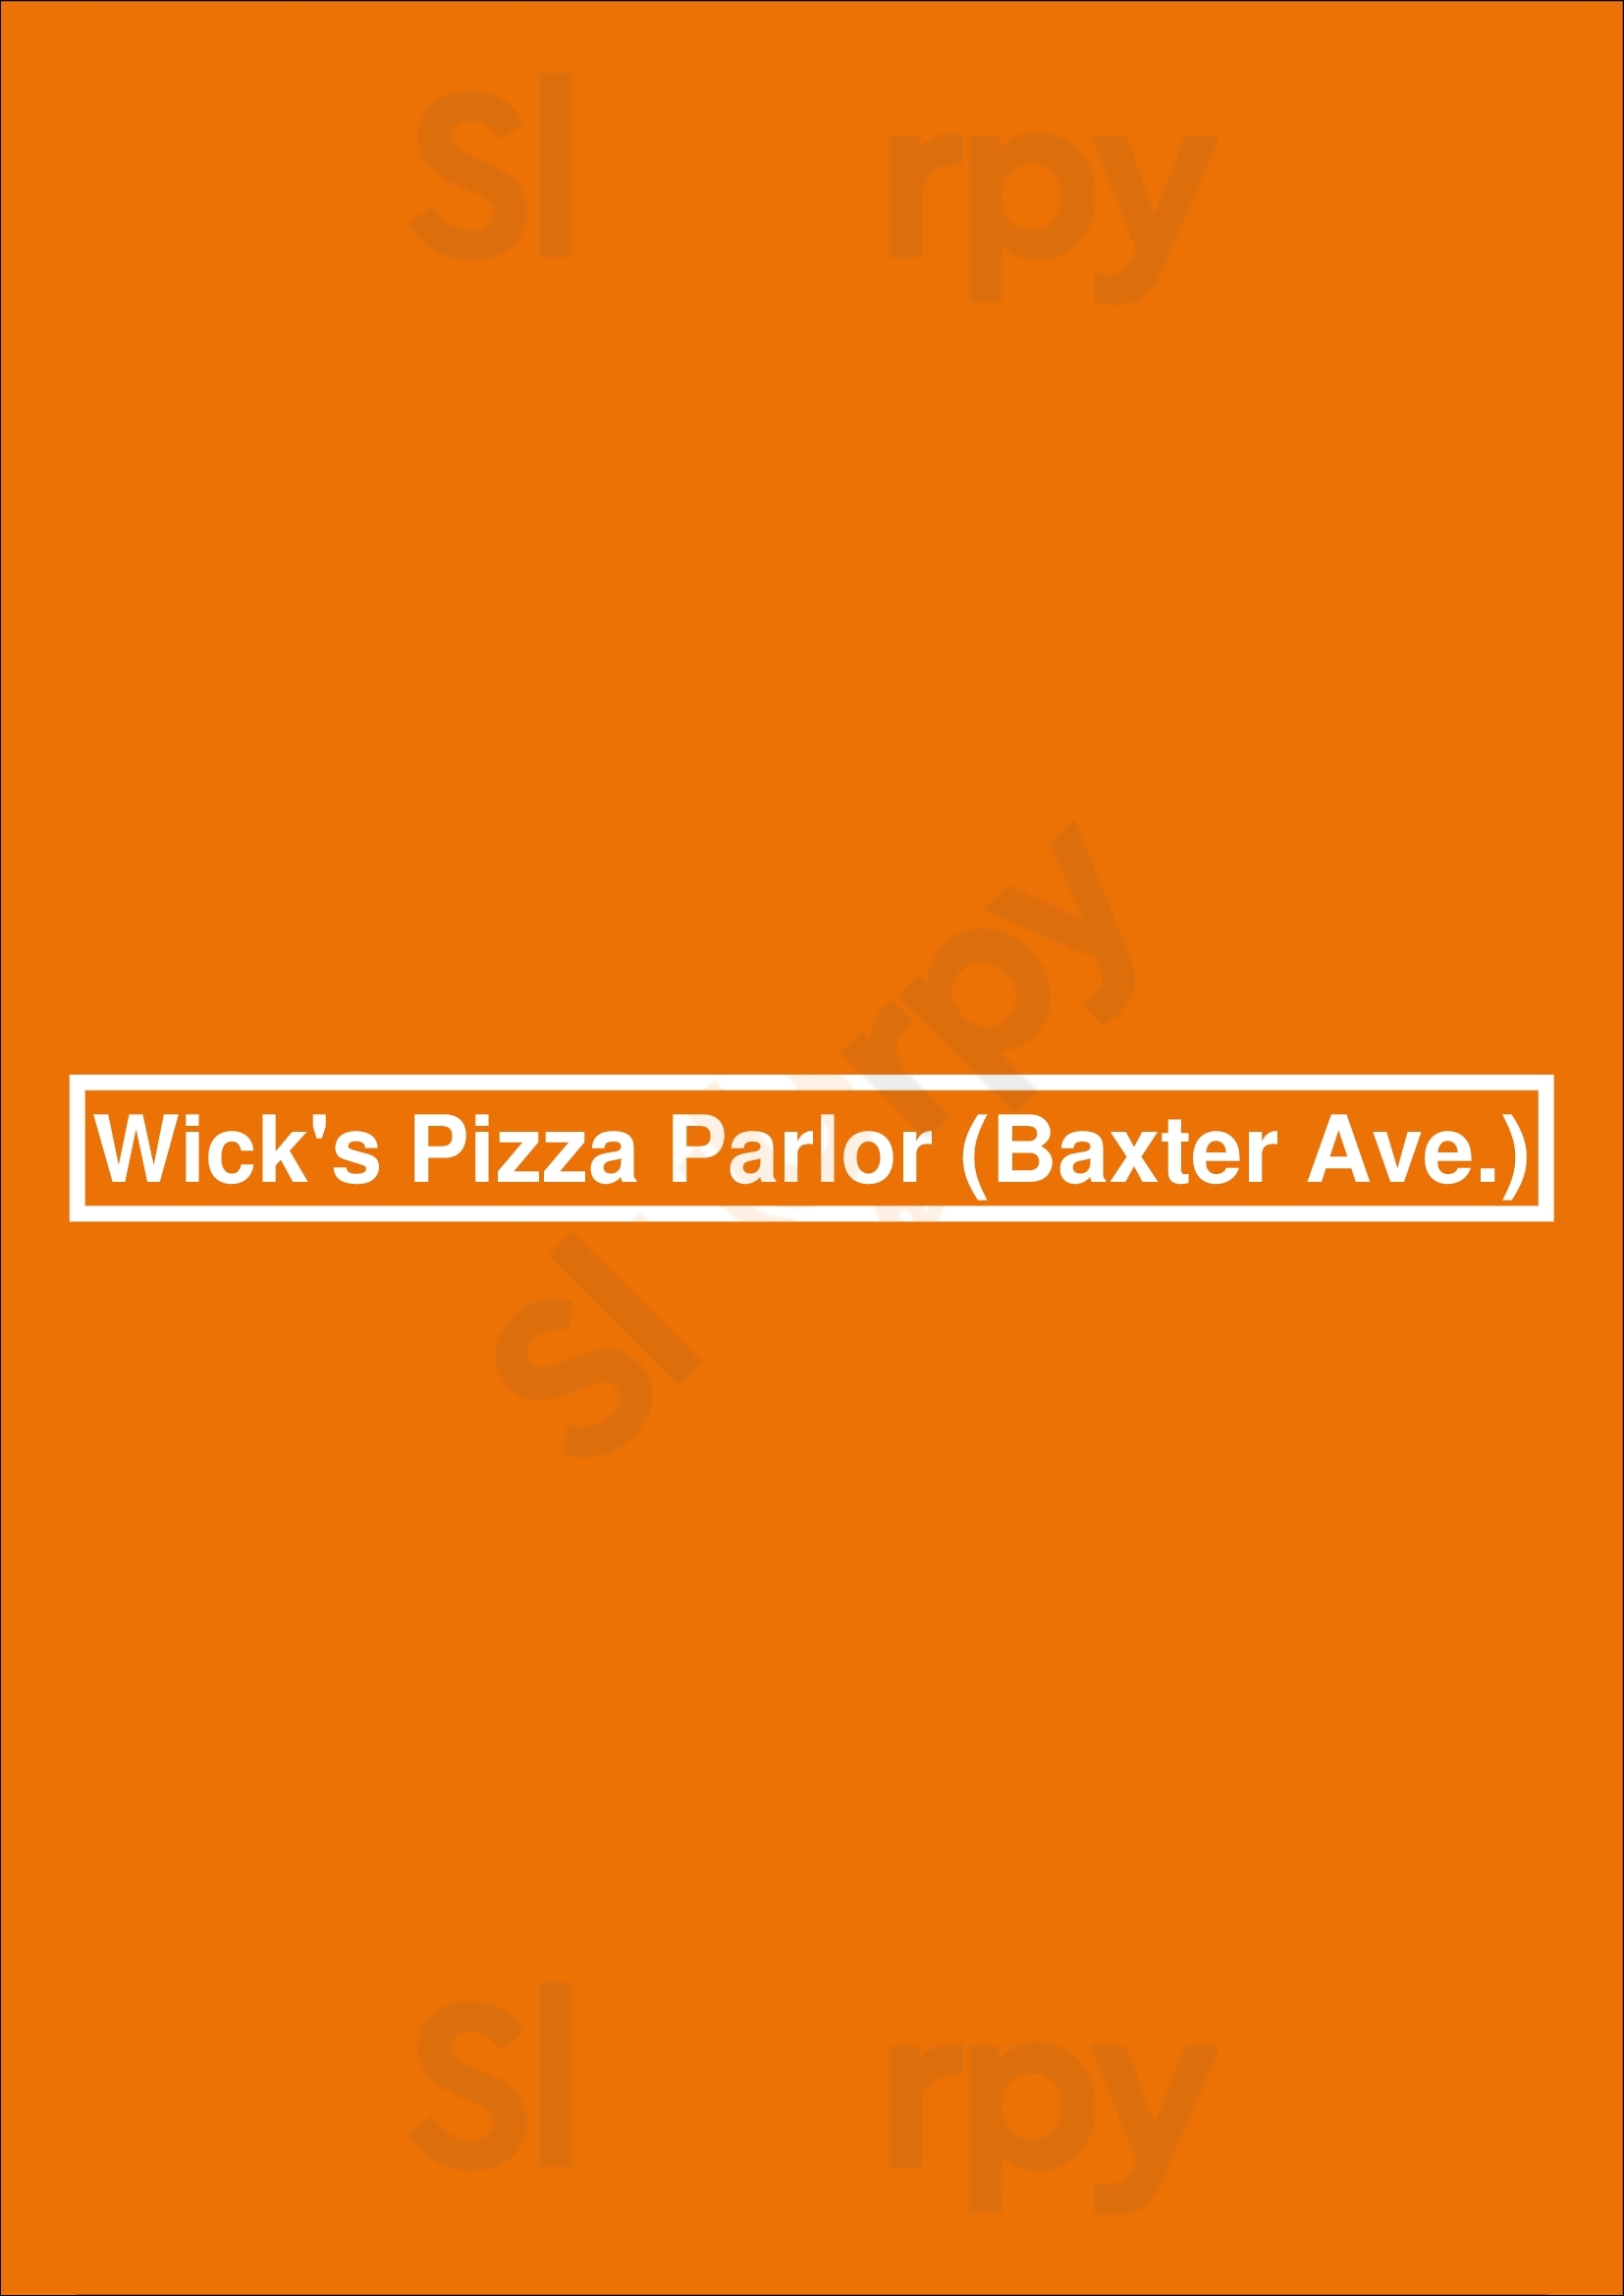 Wick's Pizza Parlor (baxter Ave.) Louisville Menu - 1